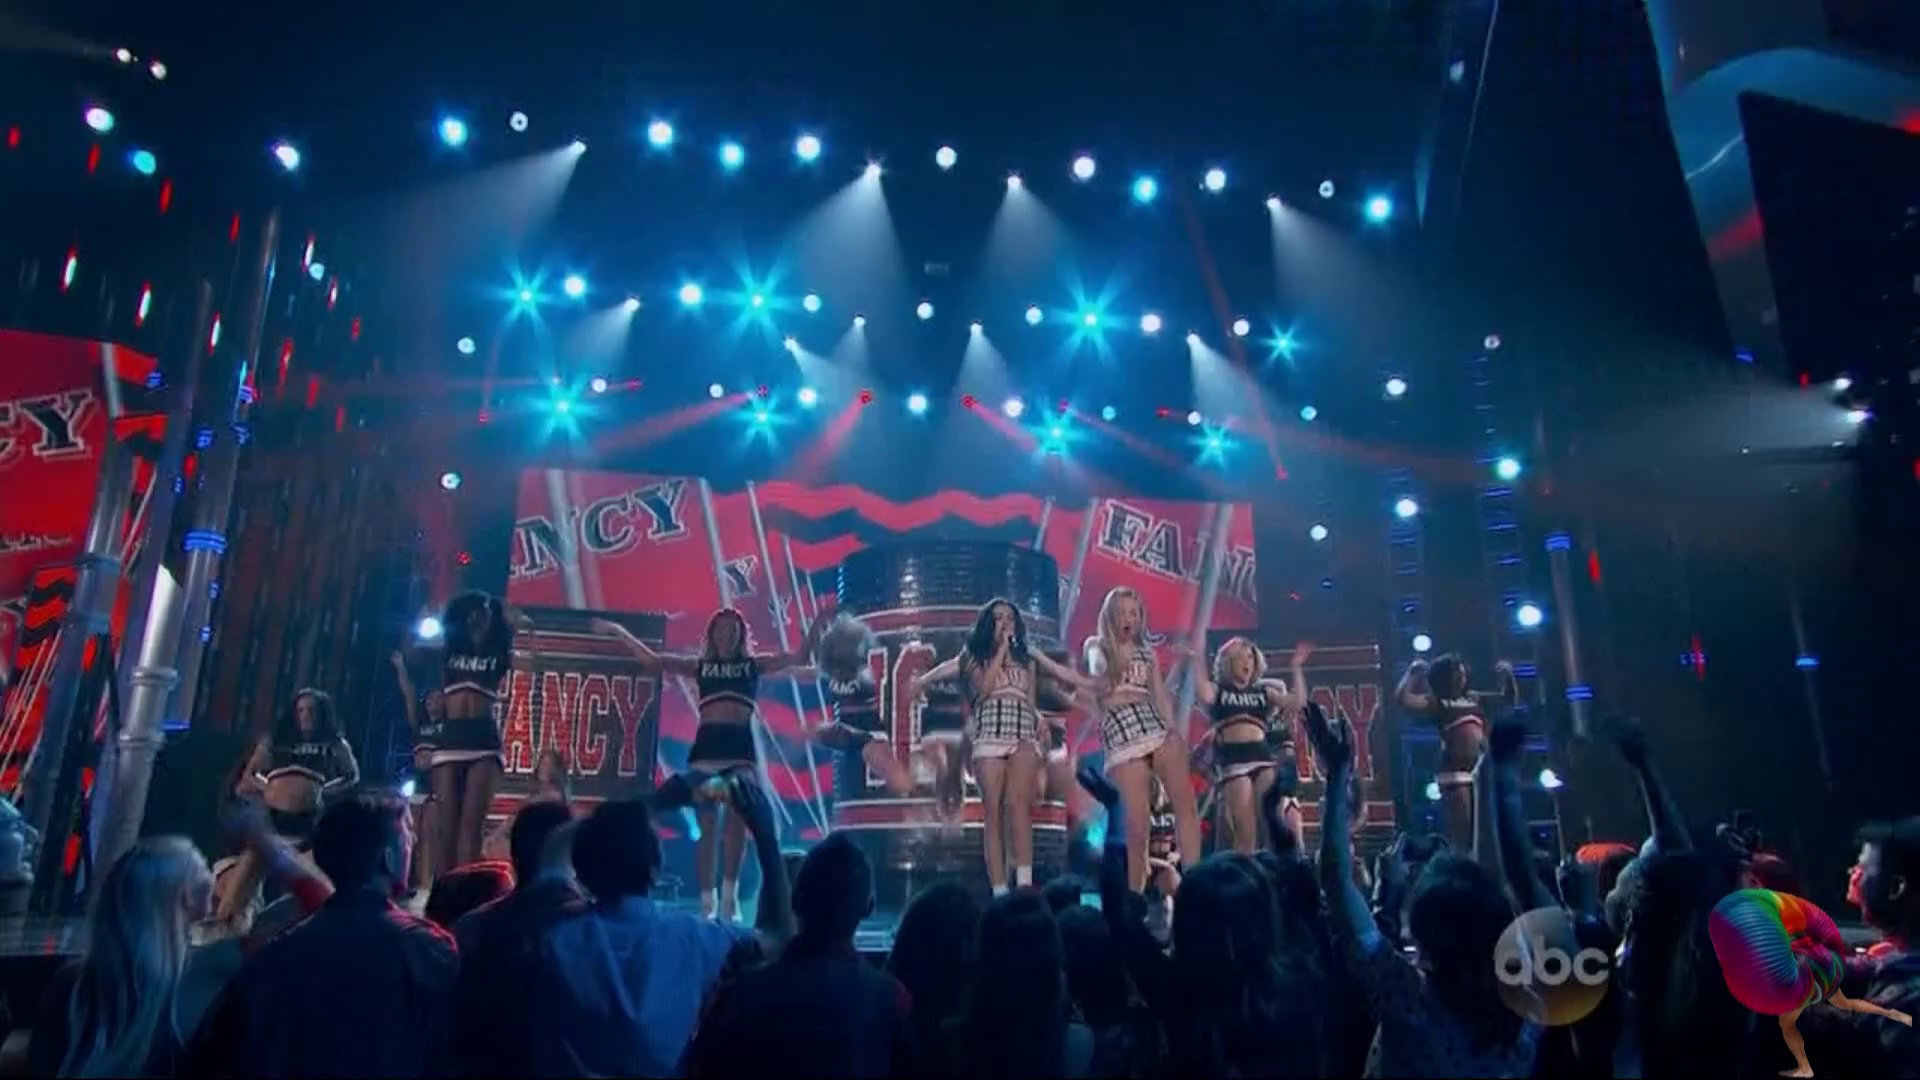 Iggy Azalea & Ariana Grande Perform “Problem” At Billboard Music Awards (Video)